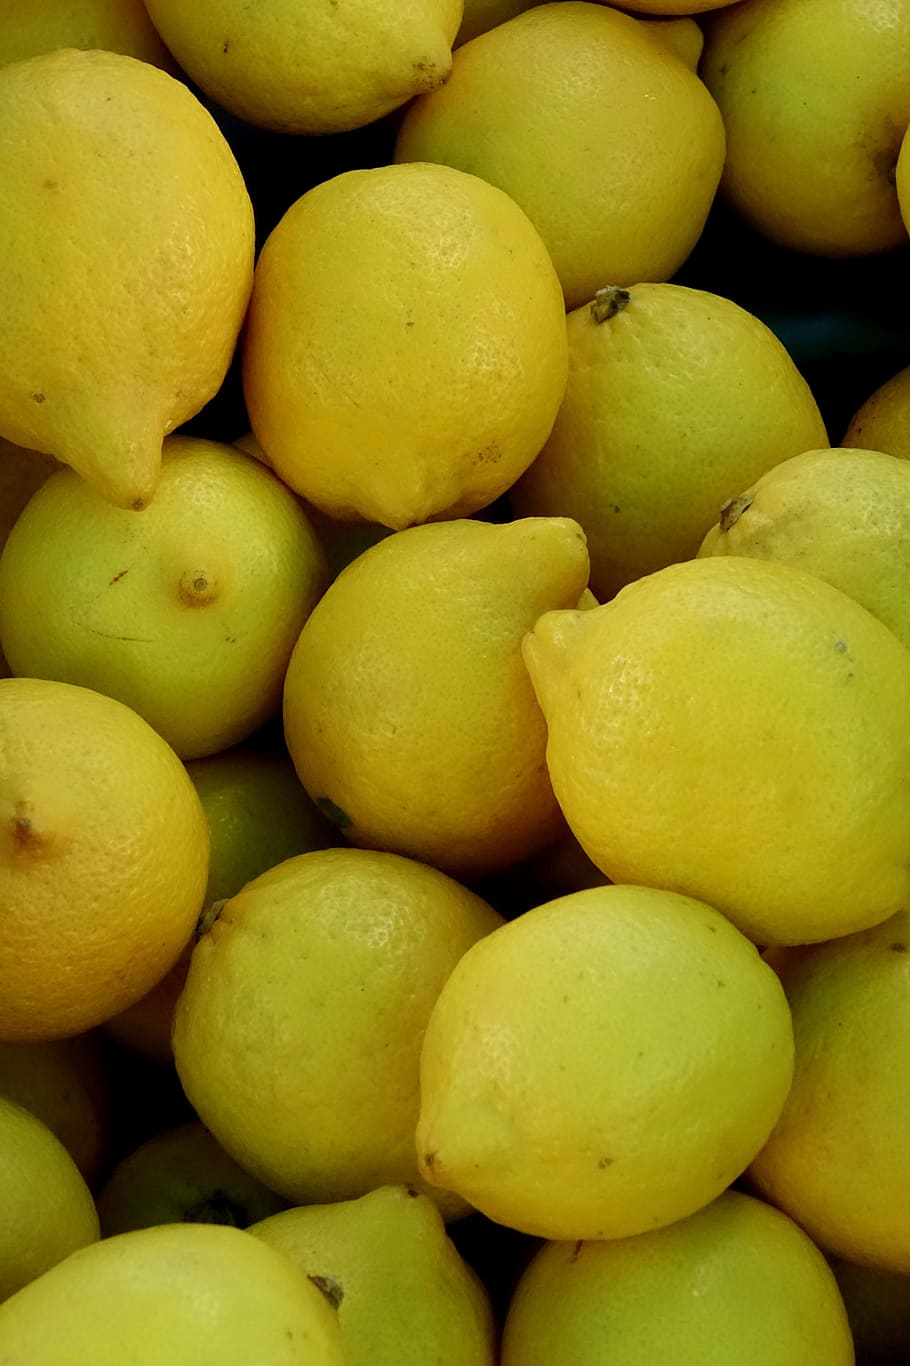 Lemons, Yellow, Sour, Citrus, Fruits, citrus fruits, fruit, lemon tree, vitamins, vitamin c